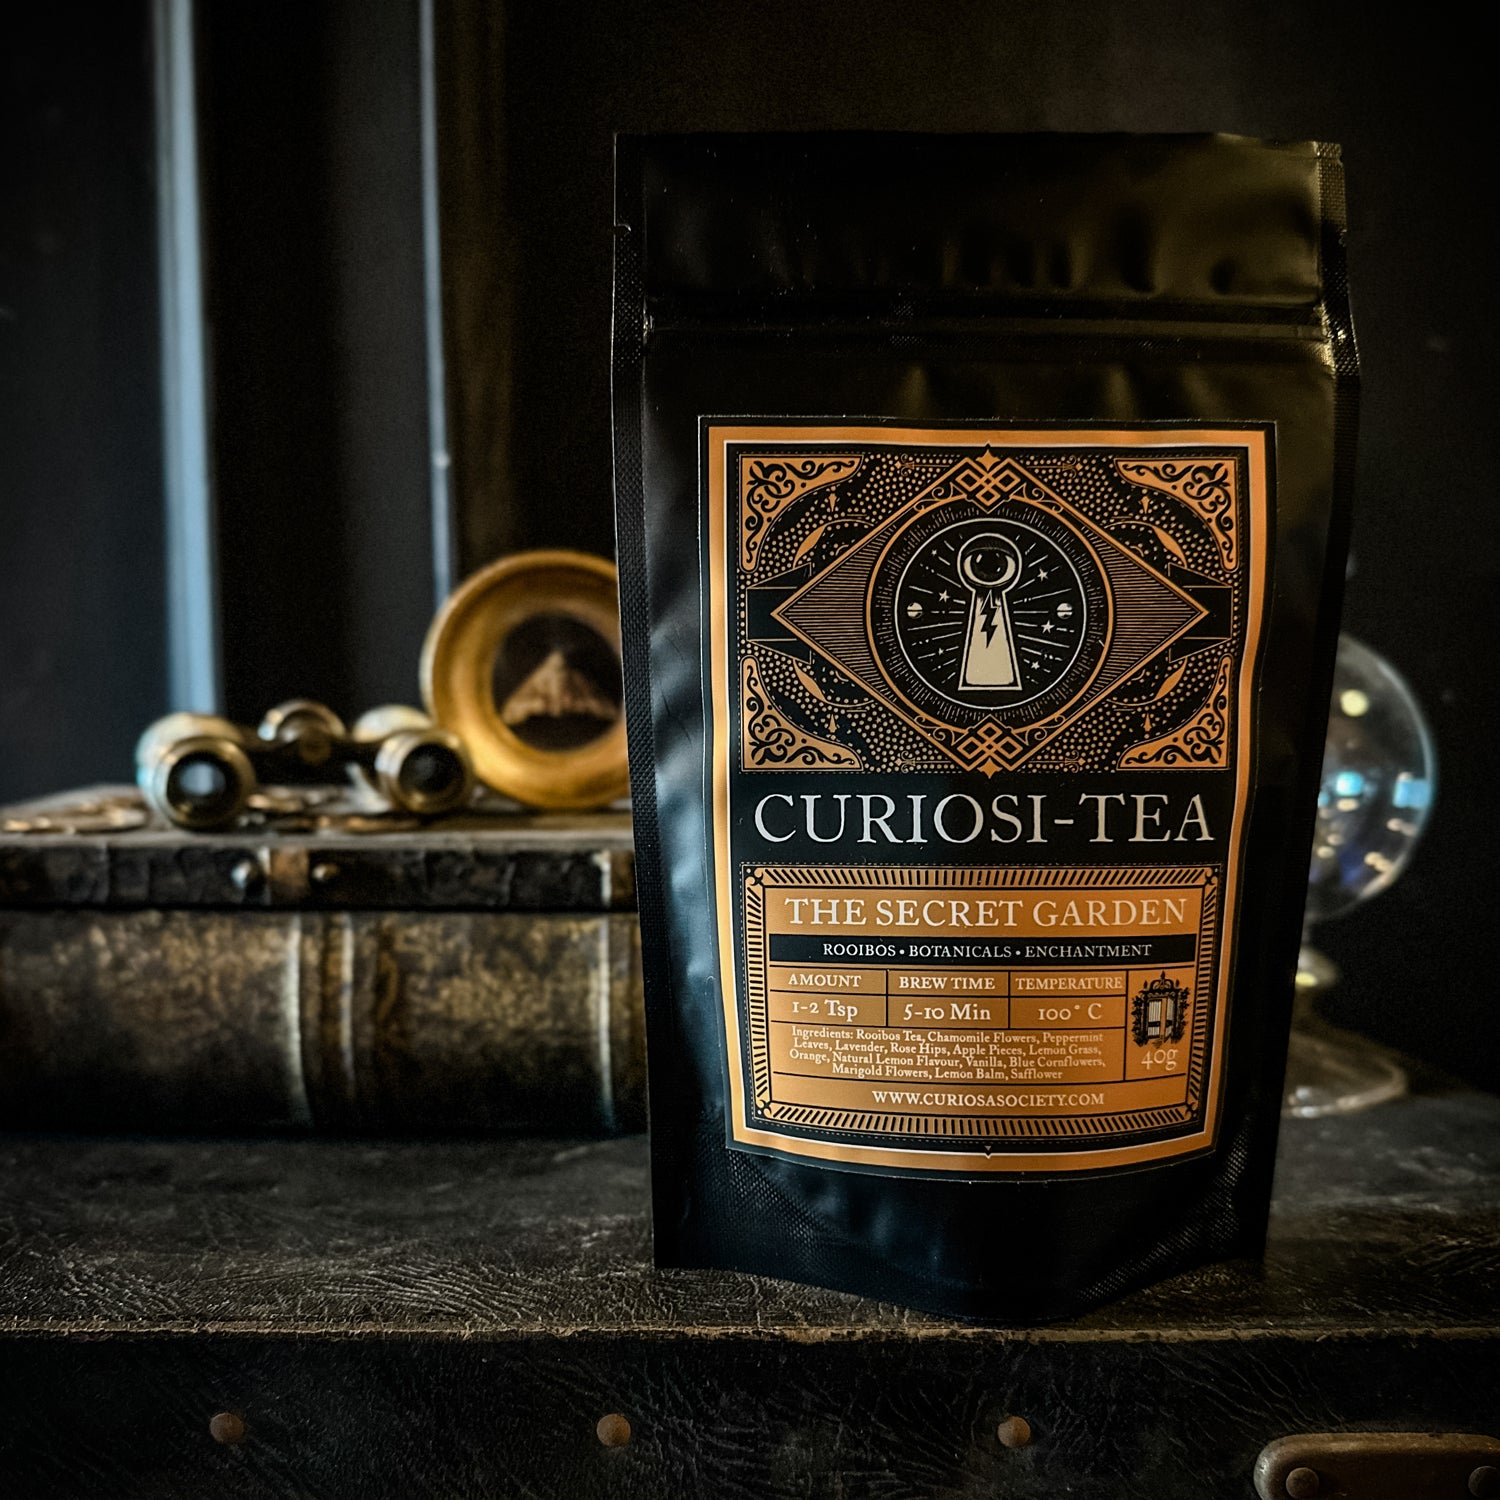 The Secret Garden Curiosi-tea